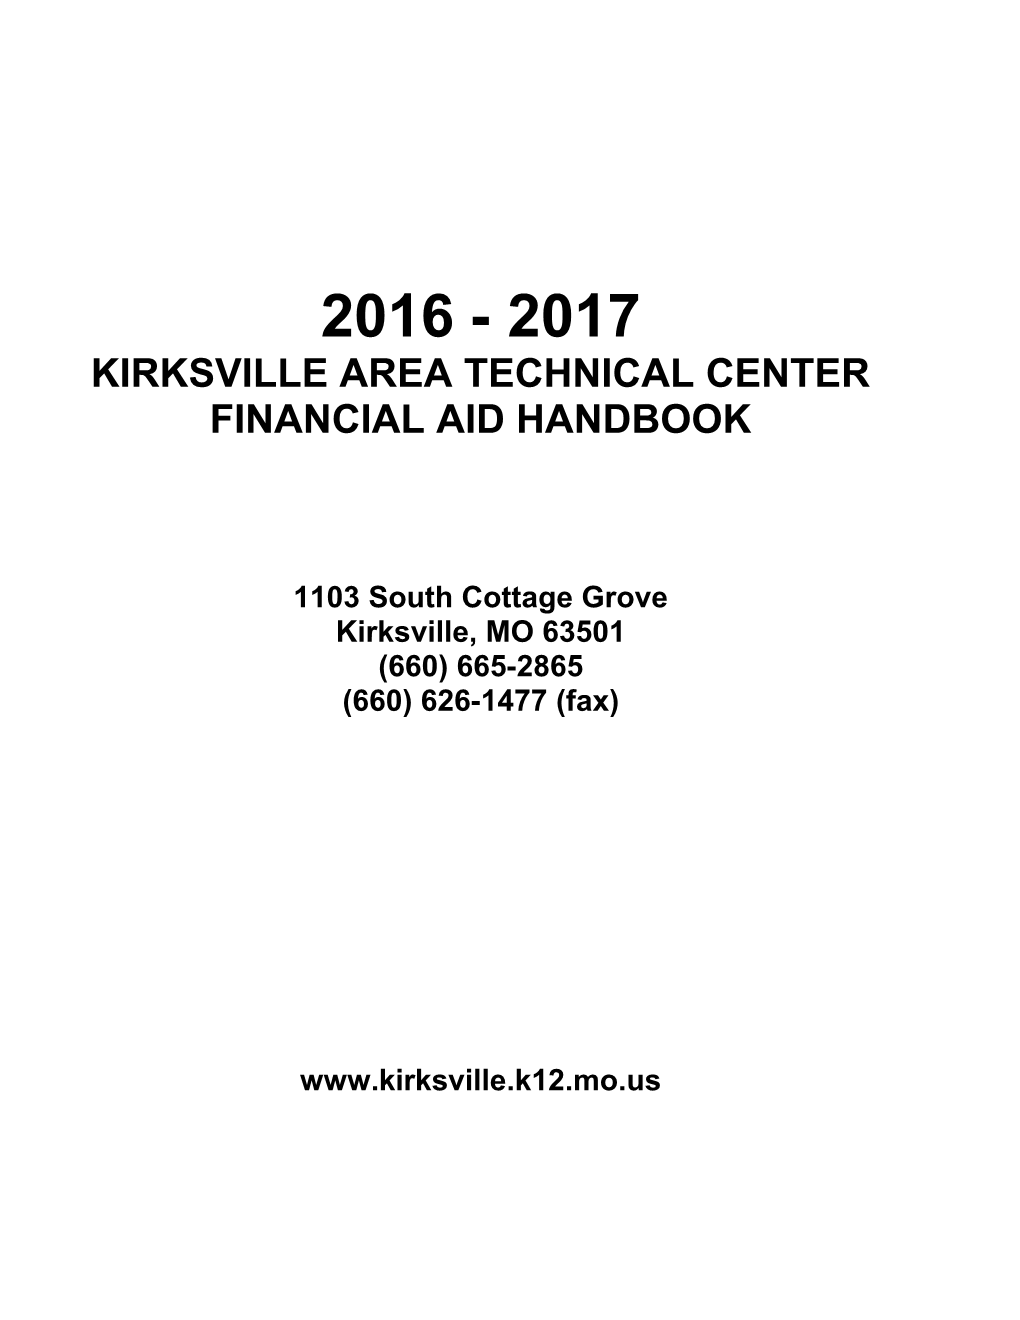 Kirksville Area Technical Center